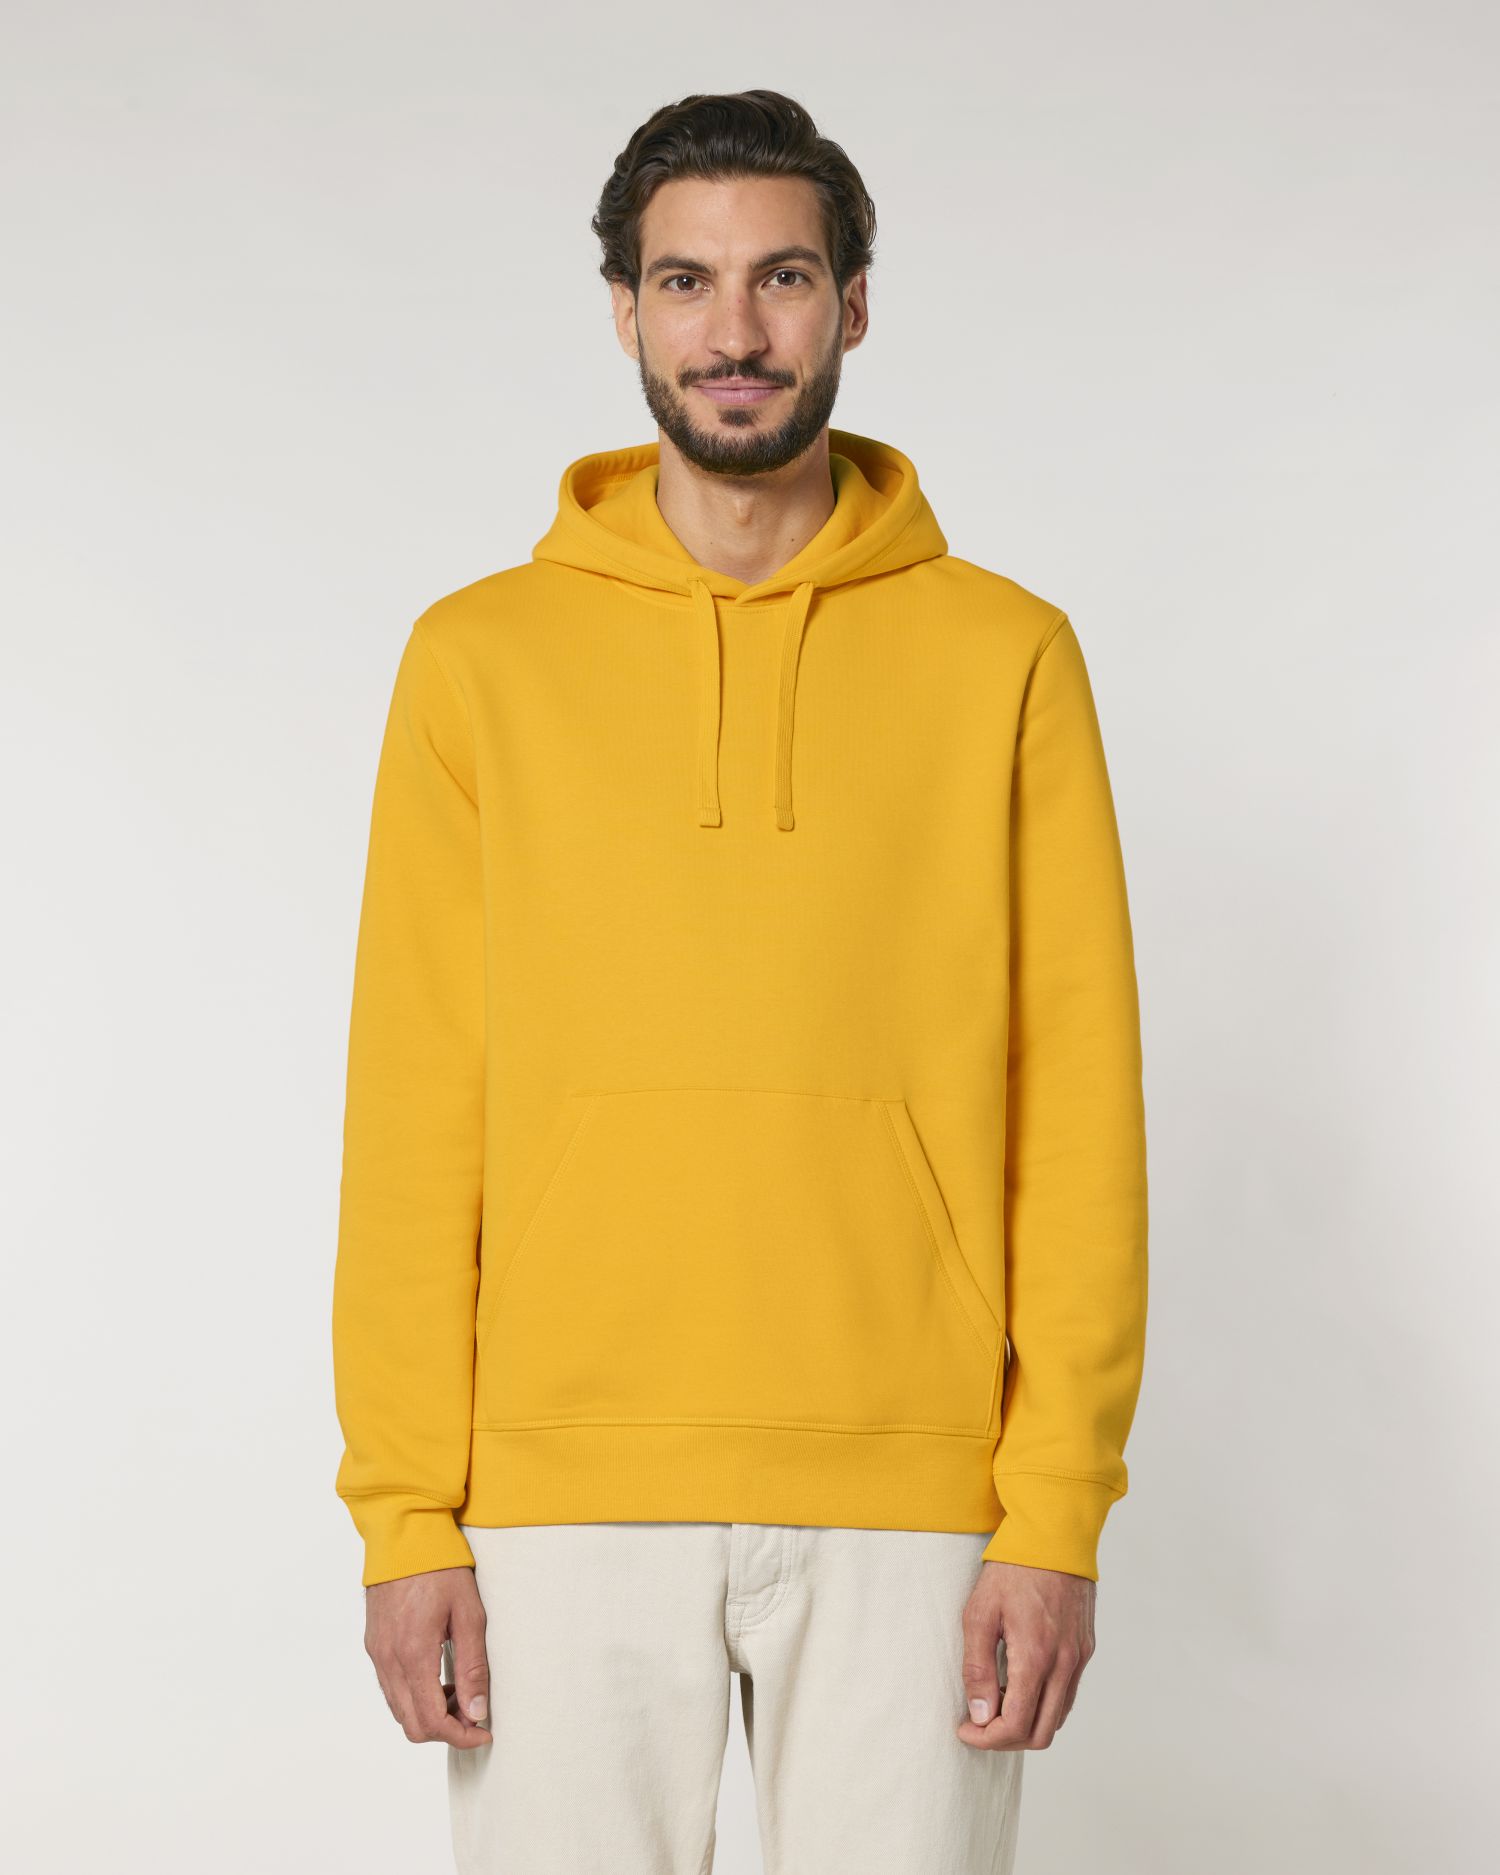 Hoodie sweatshirts Drummer 2.0 in Farbe Spectra Yellow